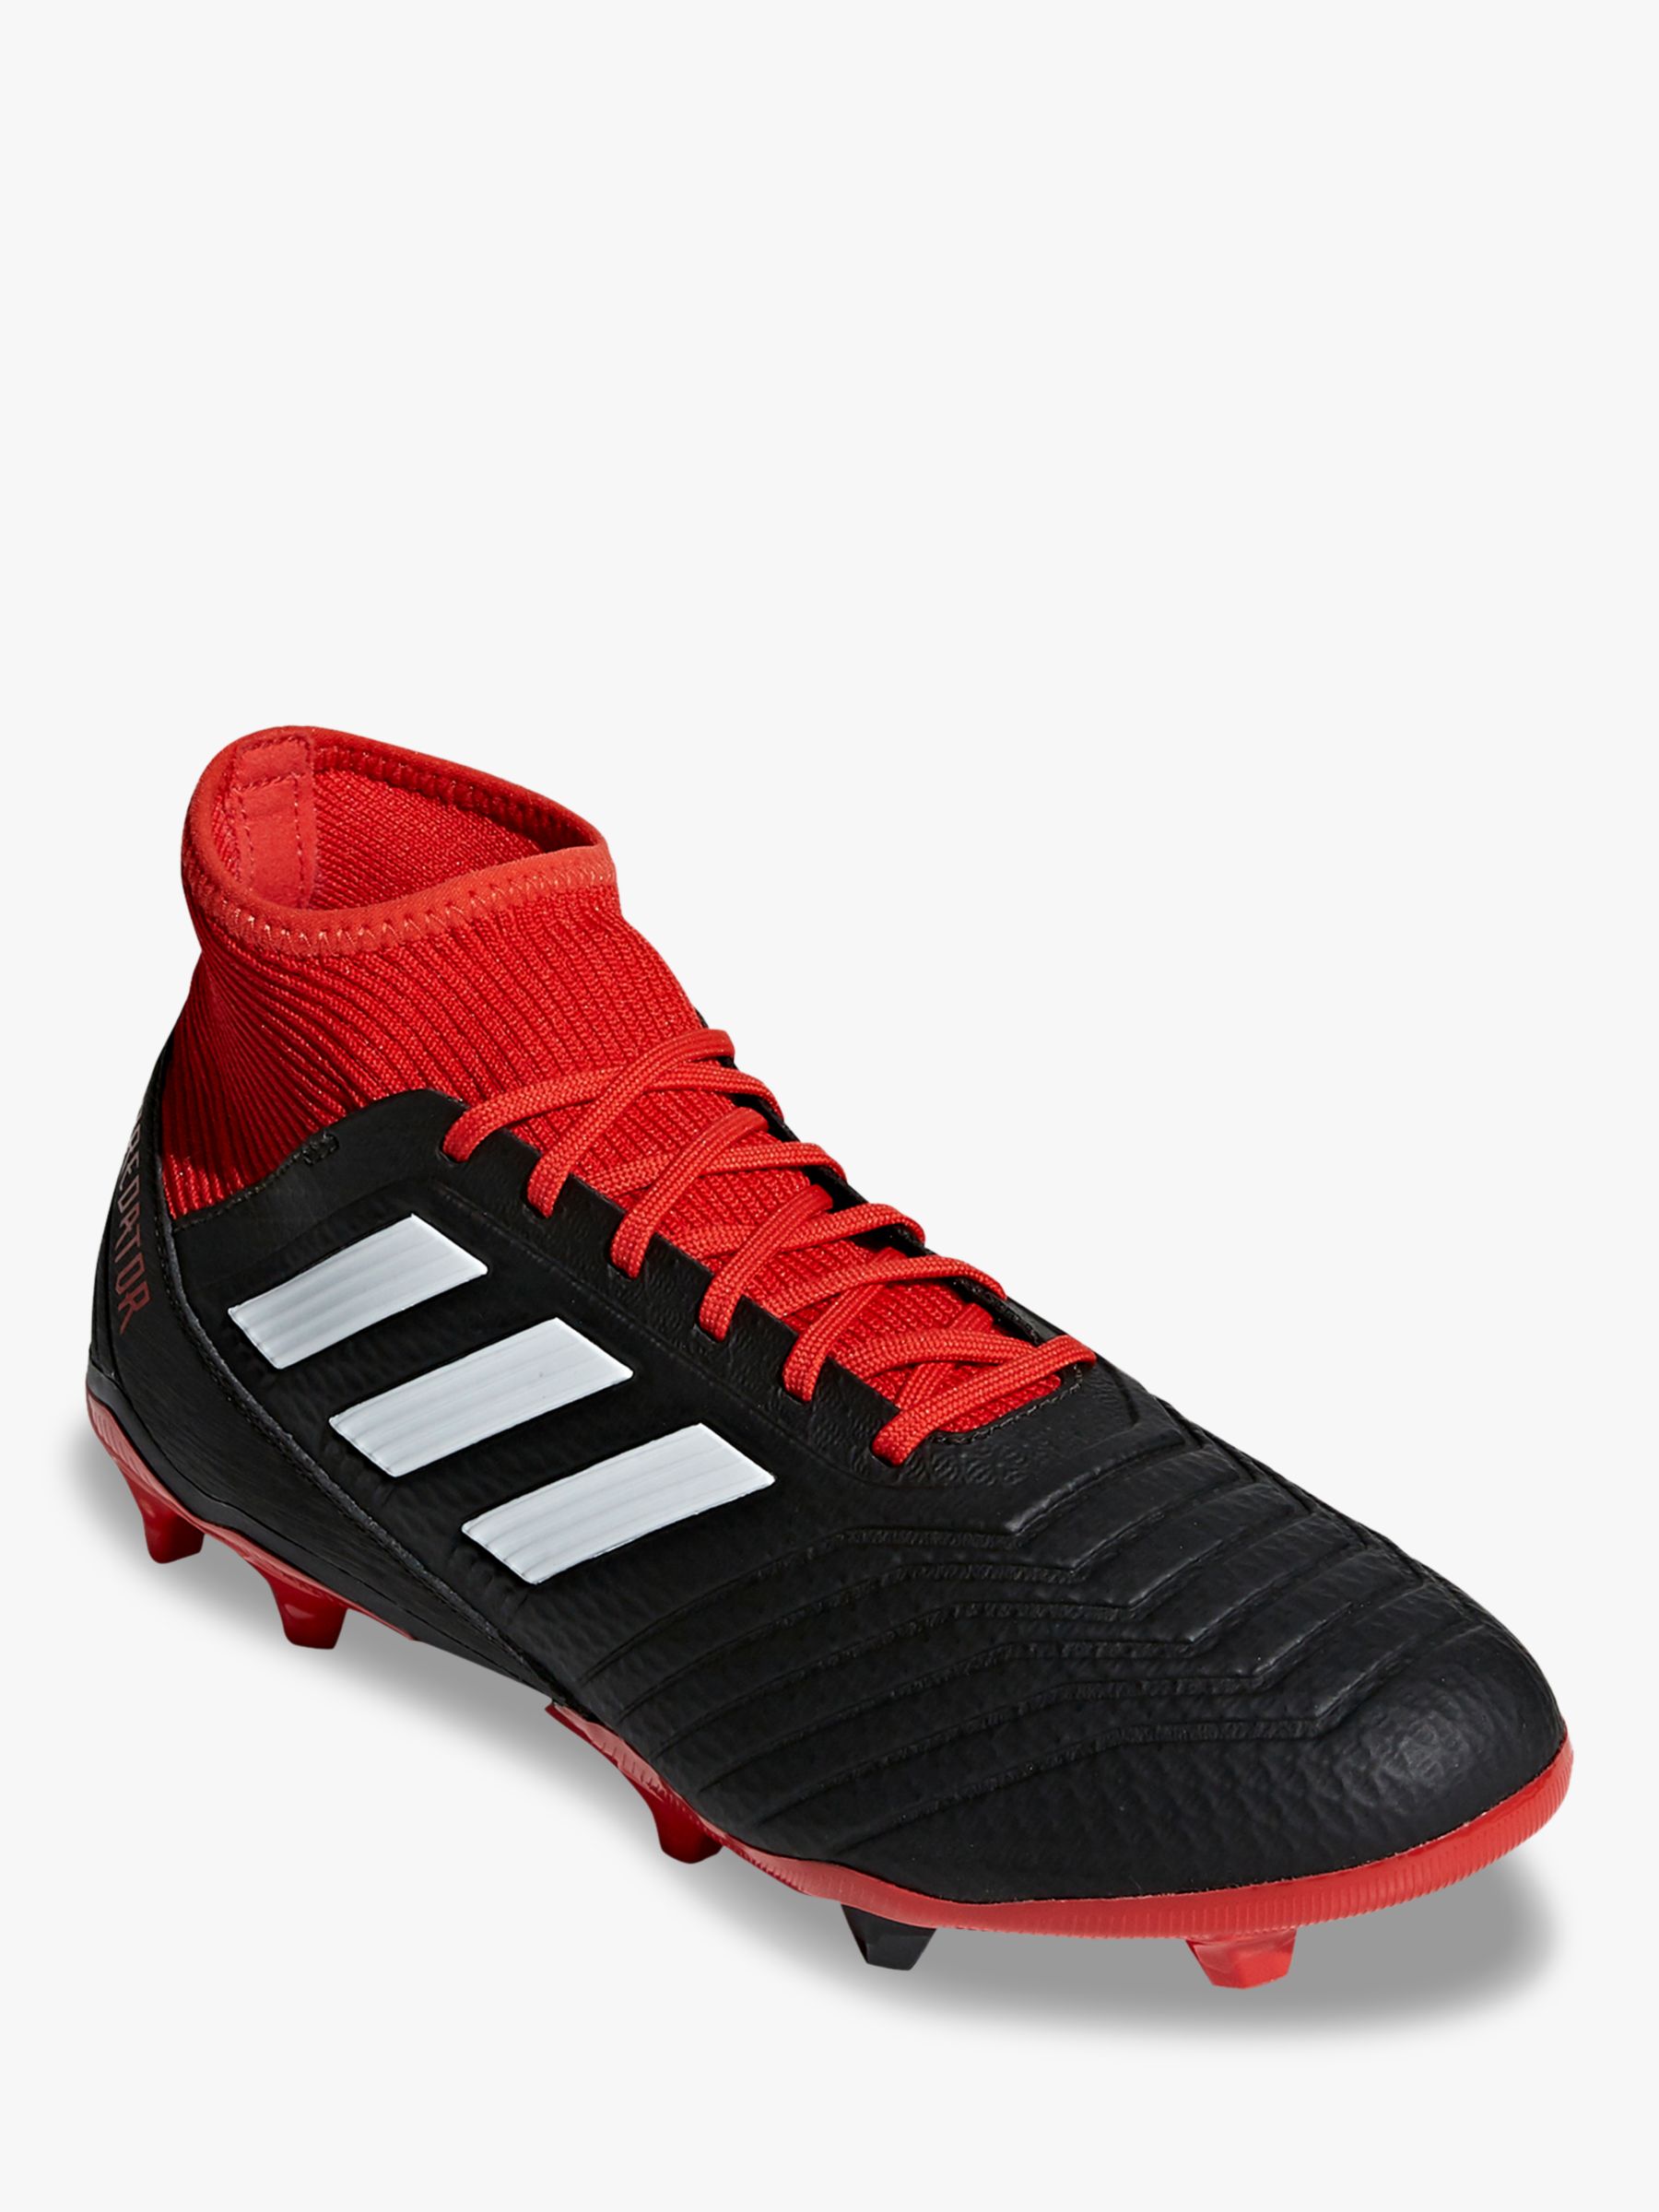 adidas predator 18.3 mens football boots